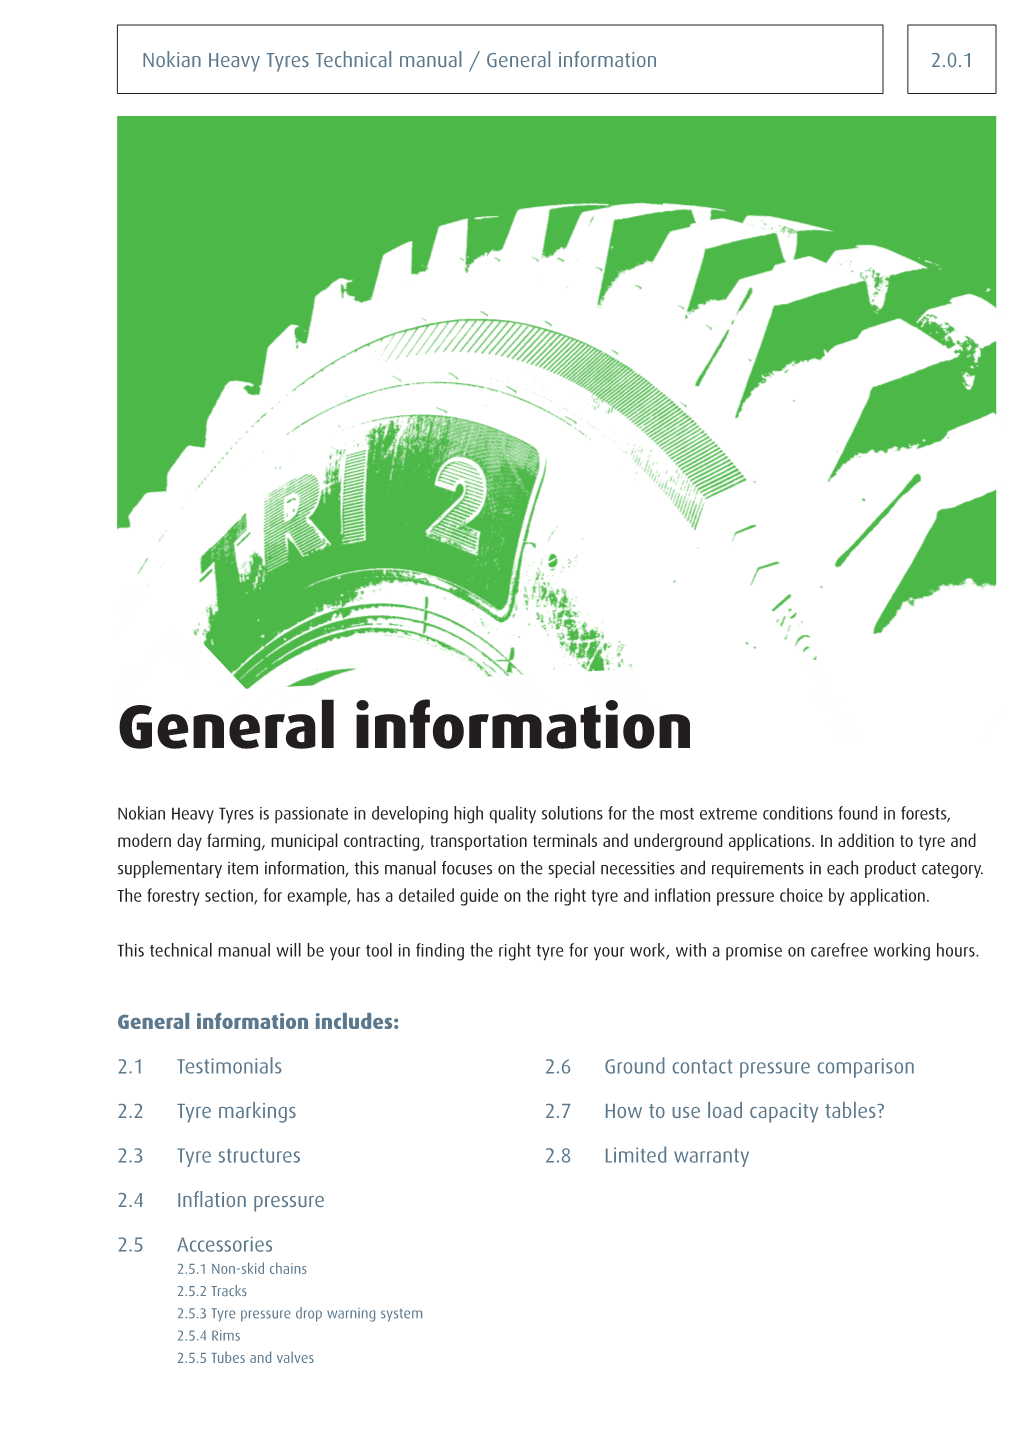 General Information 2.0.1